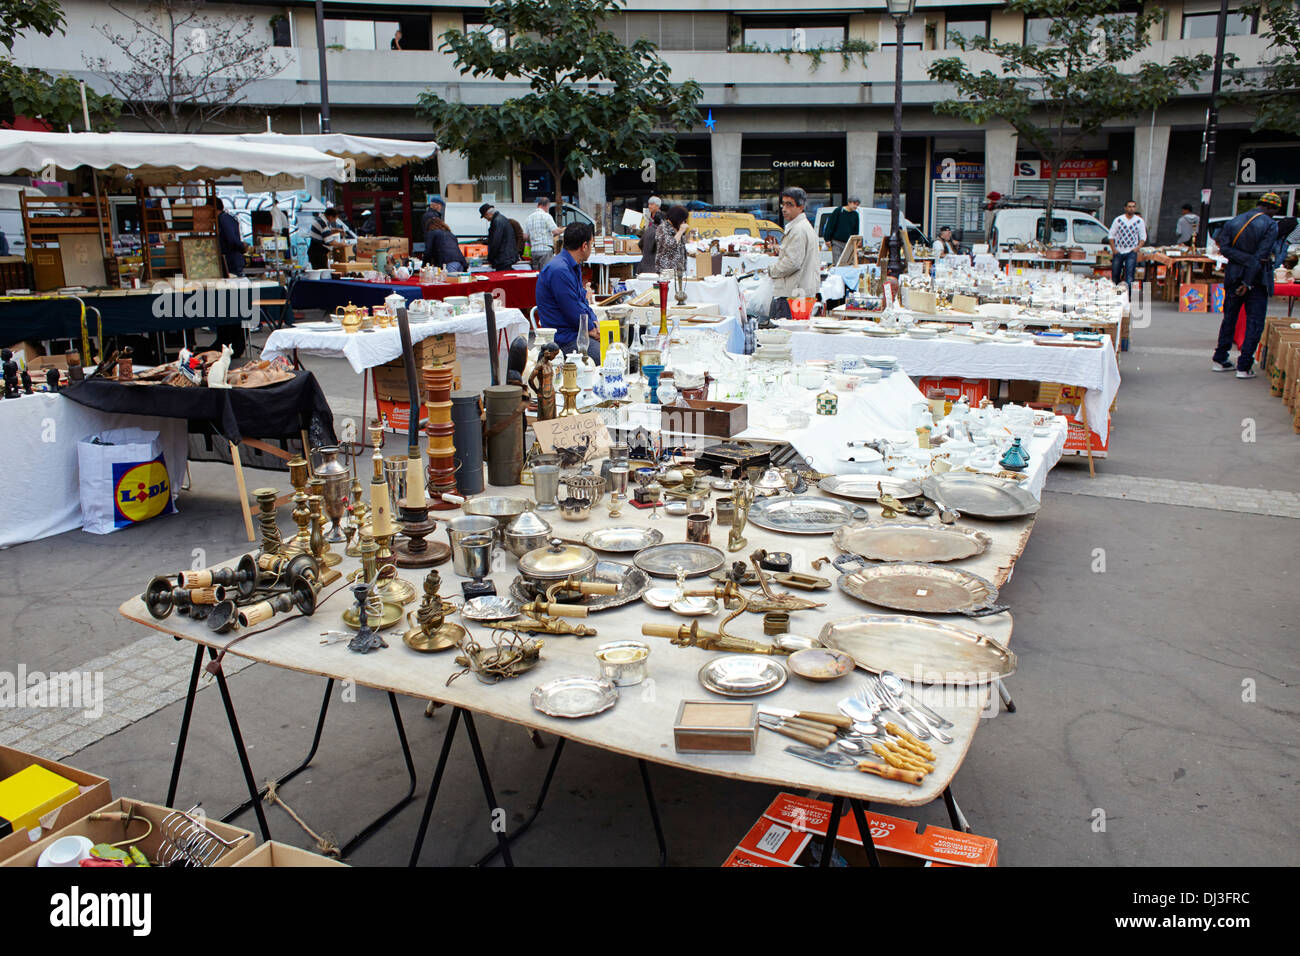 Flea market in Paris, France Stock Photo - Alamy